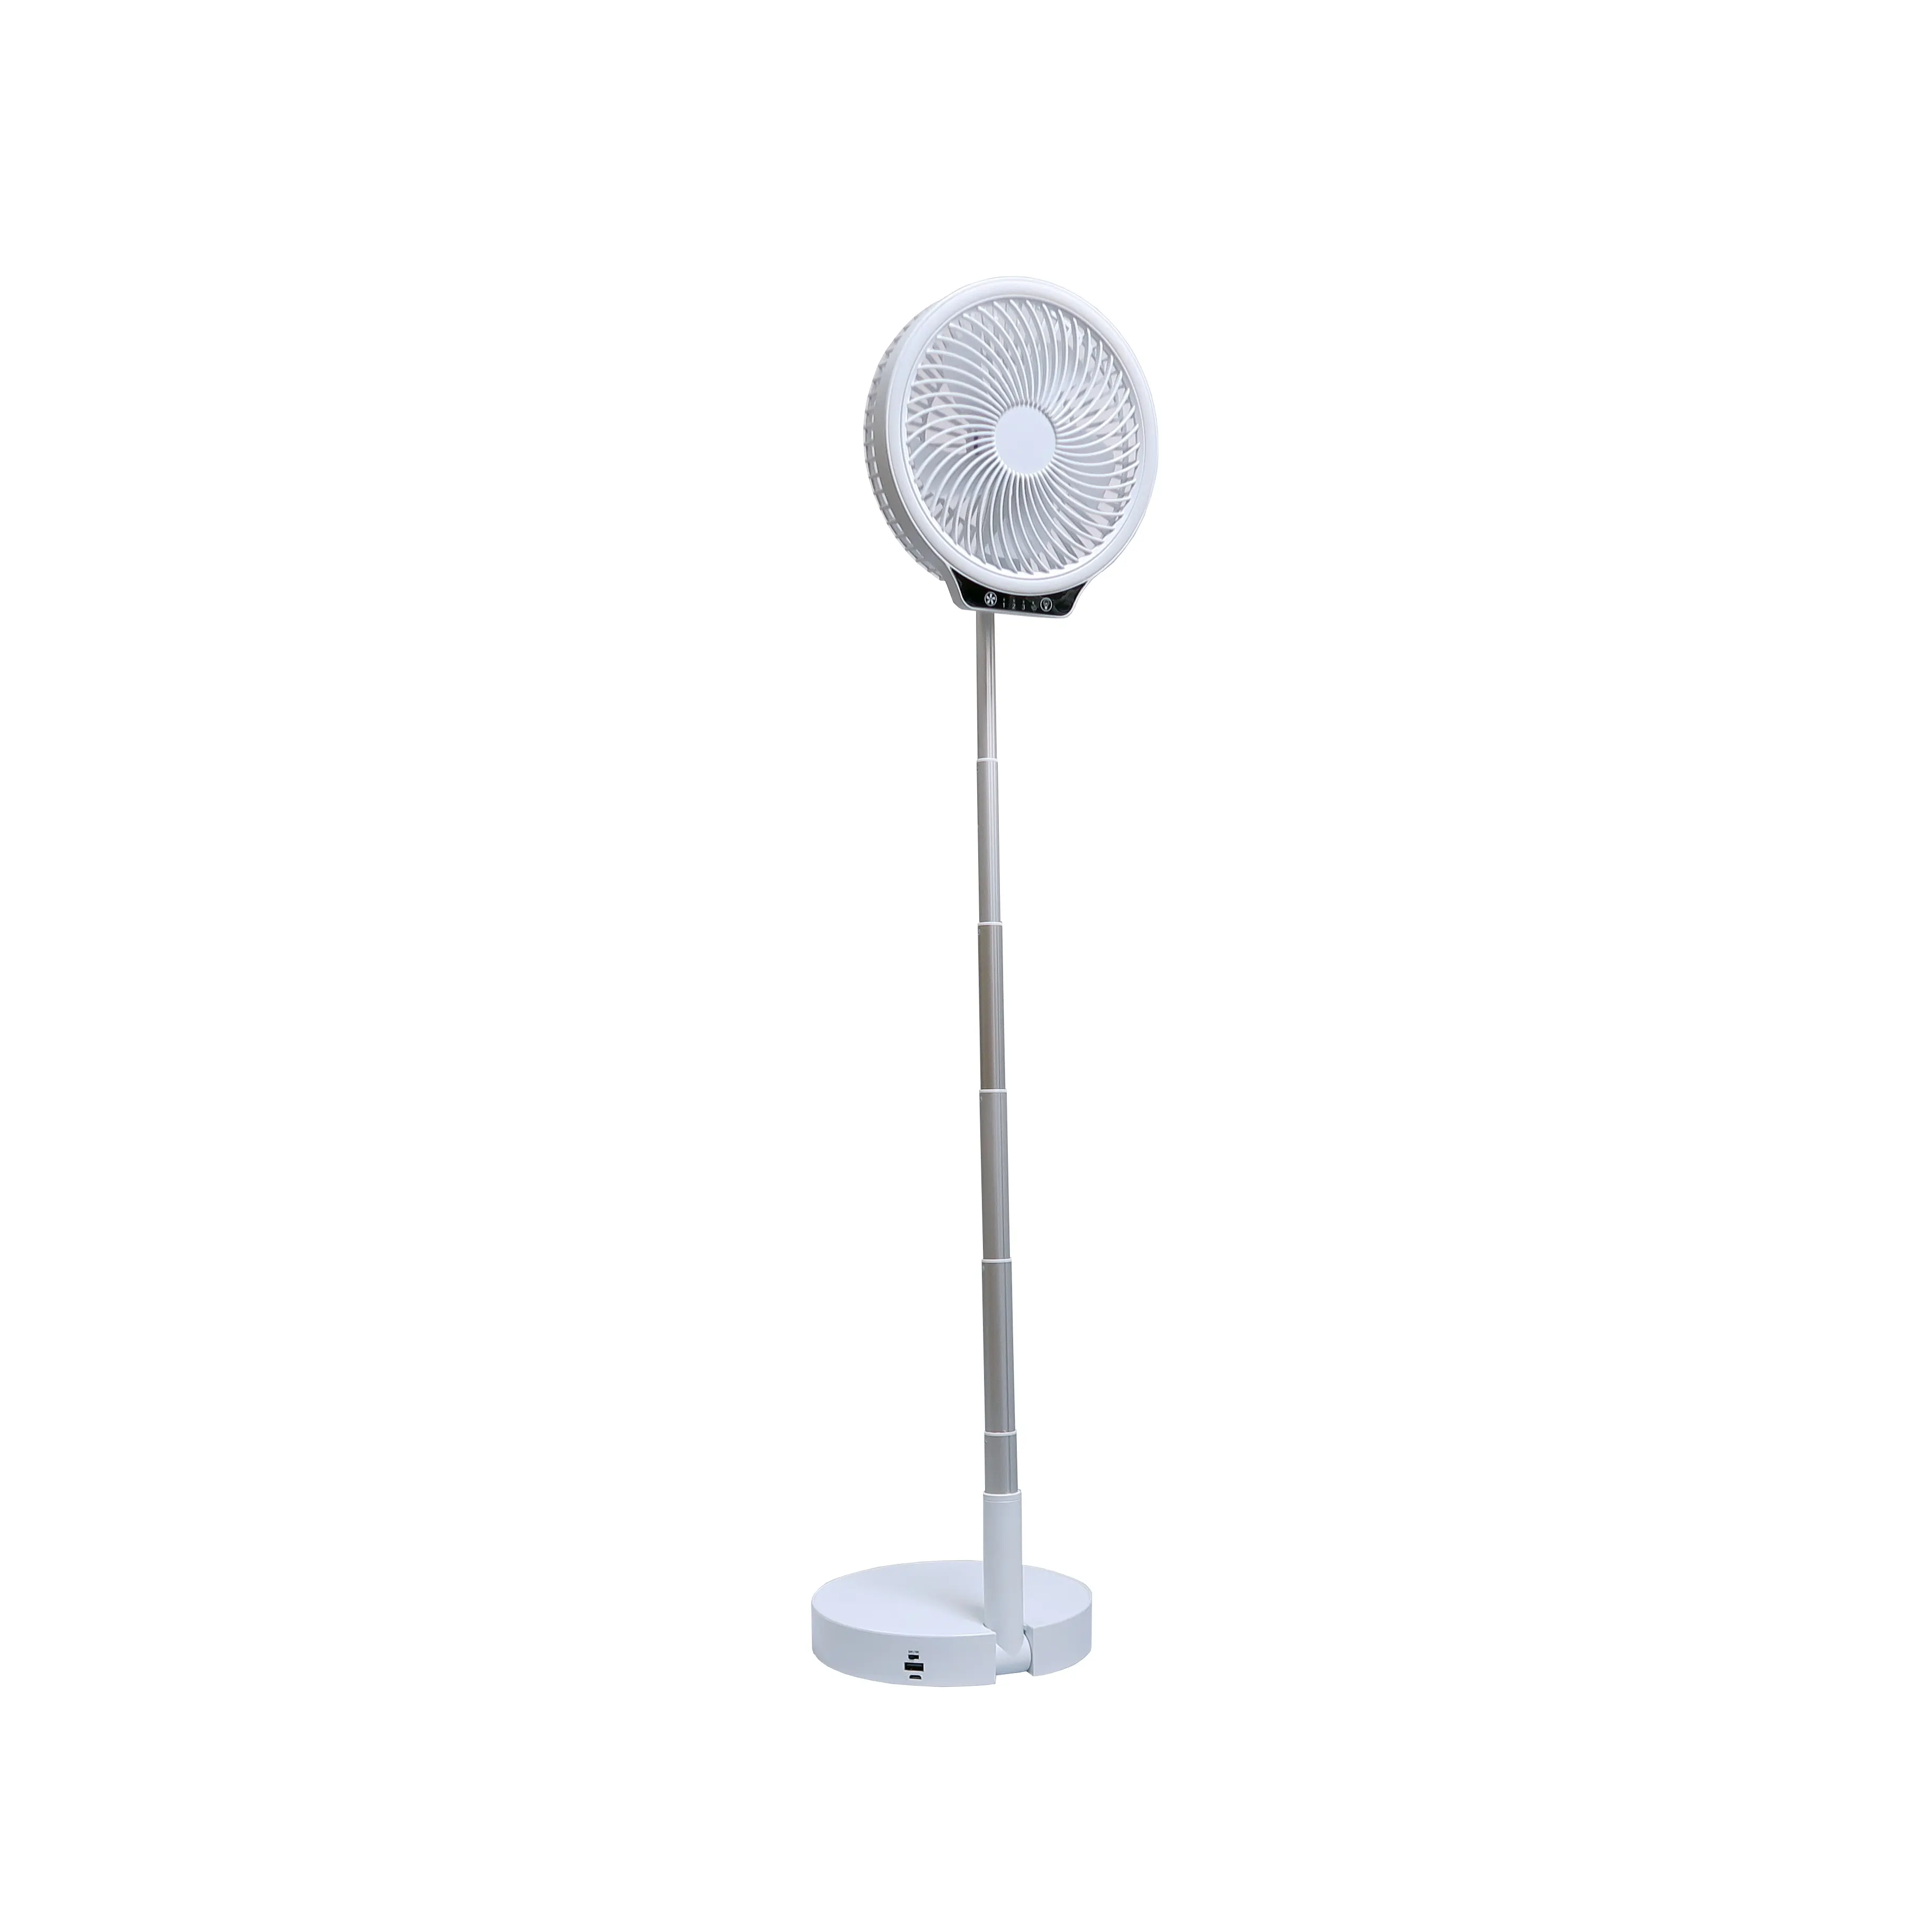 NEU Promotion Outdoor Haushalts gerät Haushalts gerät tragbare faltbare kleine Tisch ventilator Stand ventilator USB-Lüfter